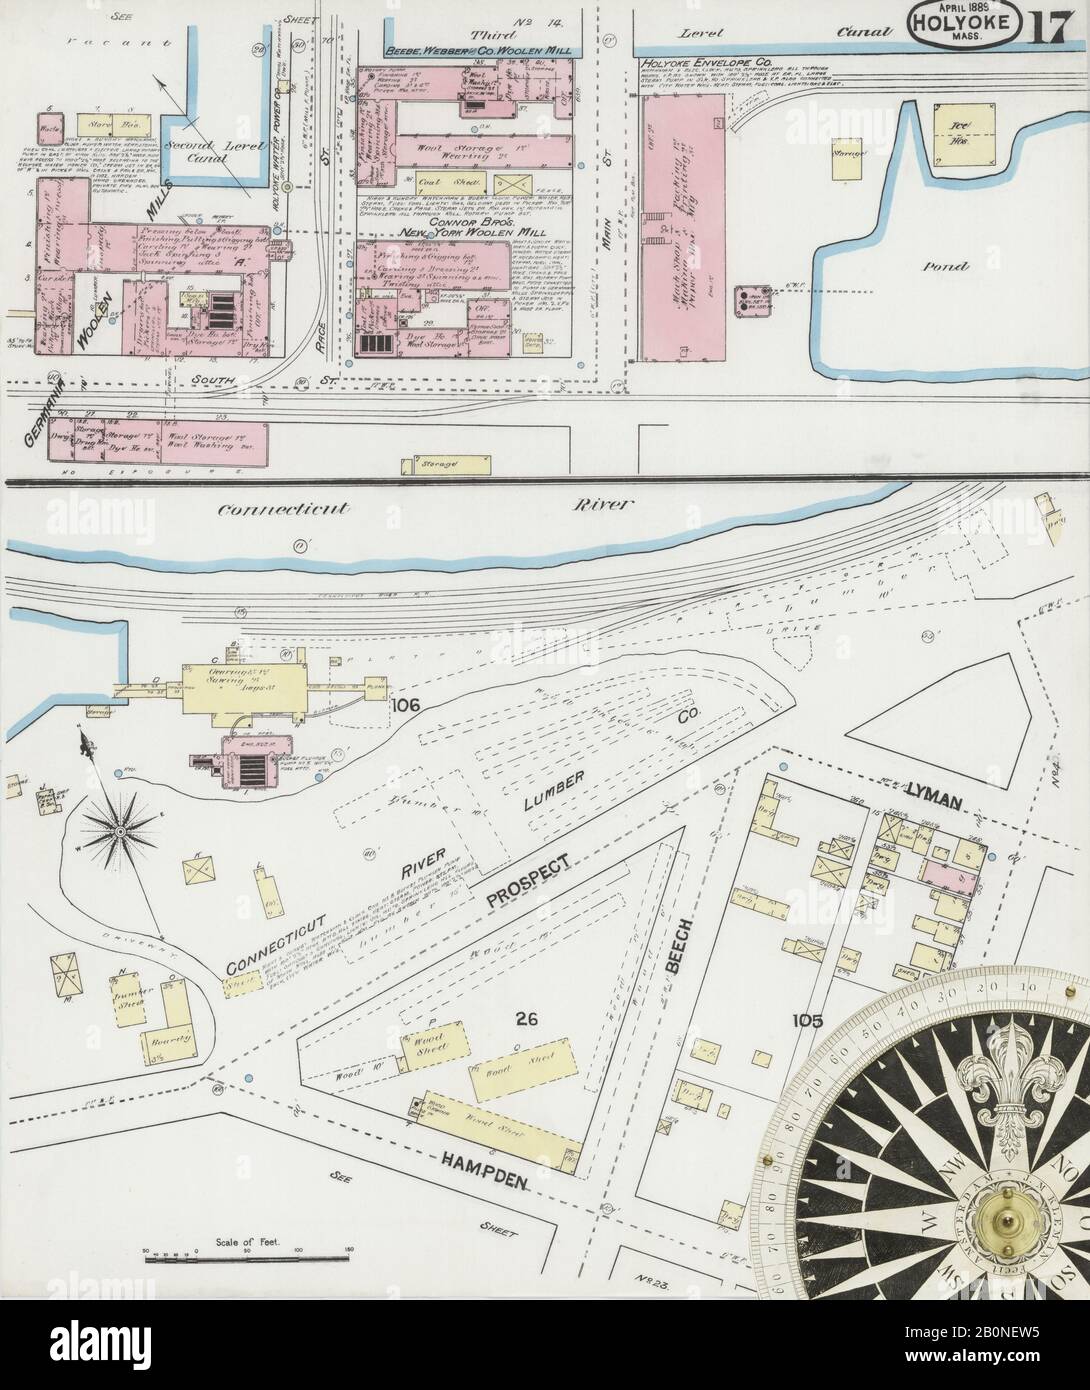 Bild 17 von Sanborn Fire Insurance Map aus Holyoke, Hampden County, Massachusetts. Apr. 30 Blatt(e), Amerika, Straßenkarte mit einem Kompass Aus Dem 19. Jahrhundert Stockfoto